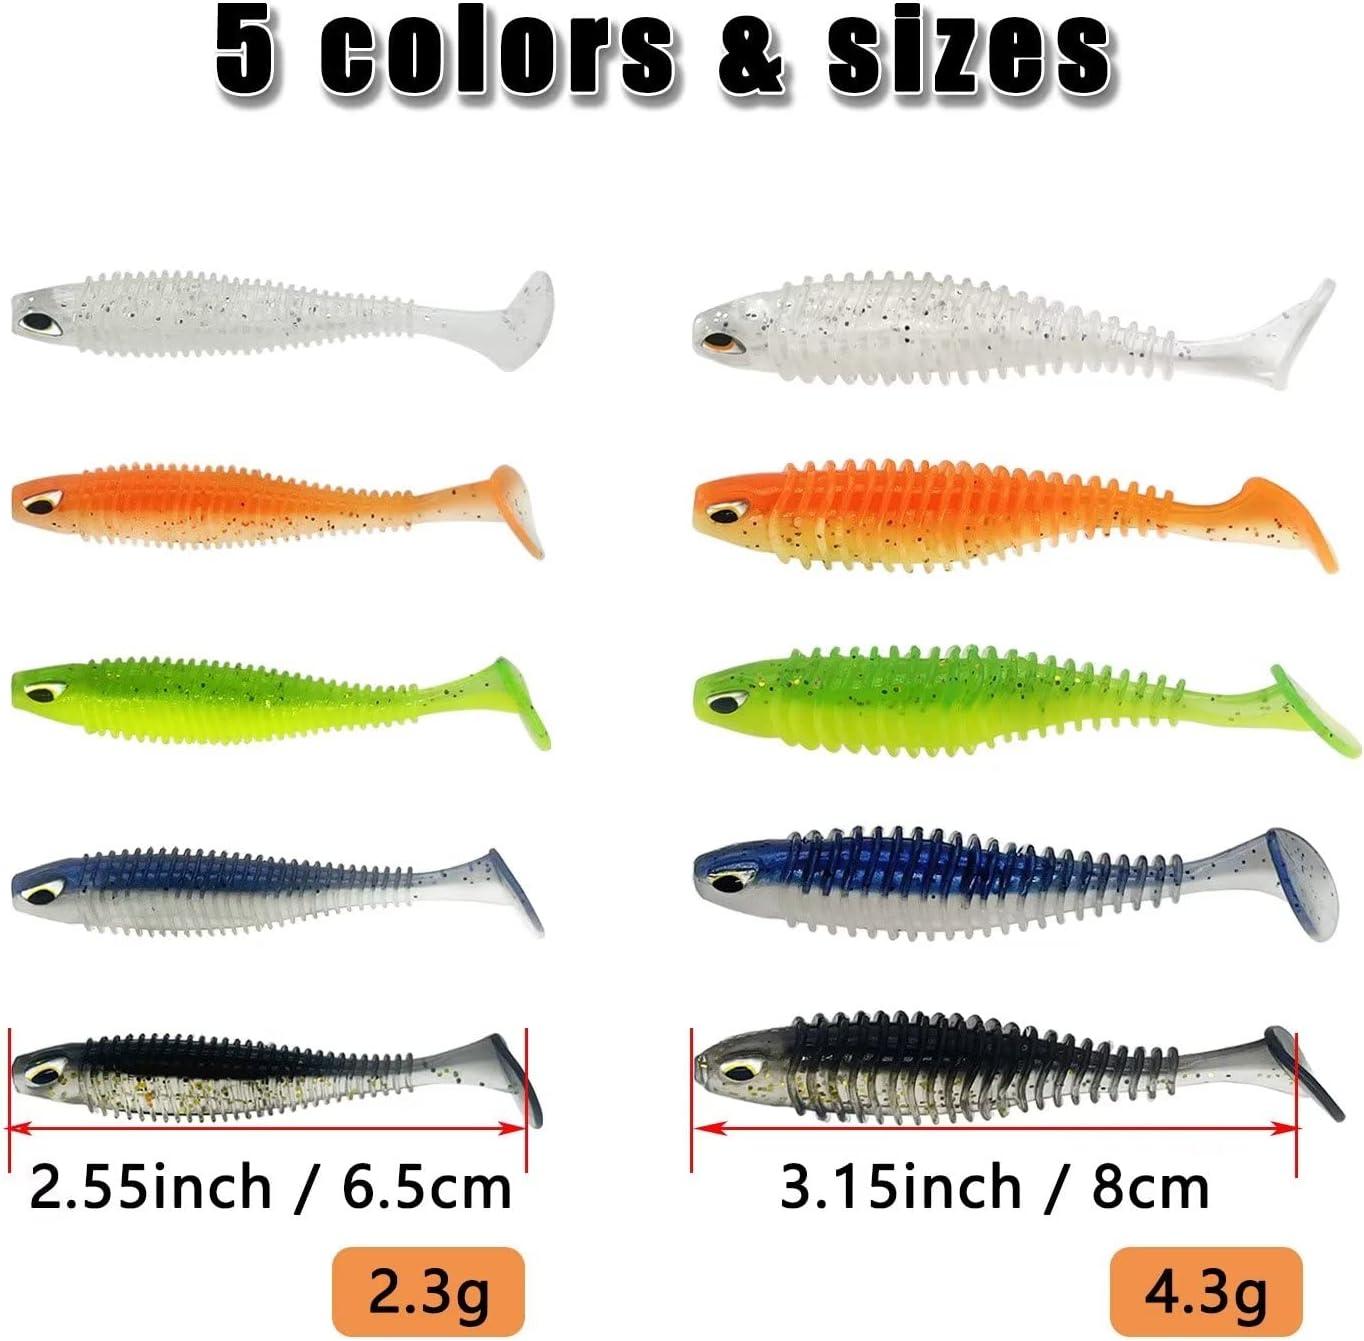 CWSDXM Soft Fishing Lures, 6.5cm/8cm Paddle Tail Swimbaits Soft Plastic  Lures Kit for Bass Trout Walleye Crappie 30pcs/40pcs 8cm/3.15in - 30pcs